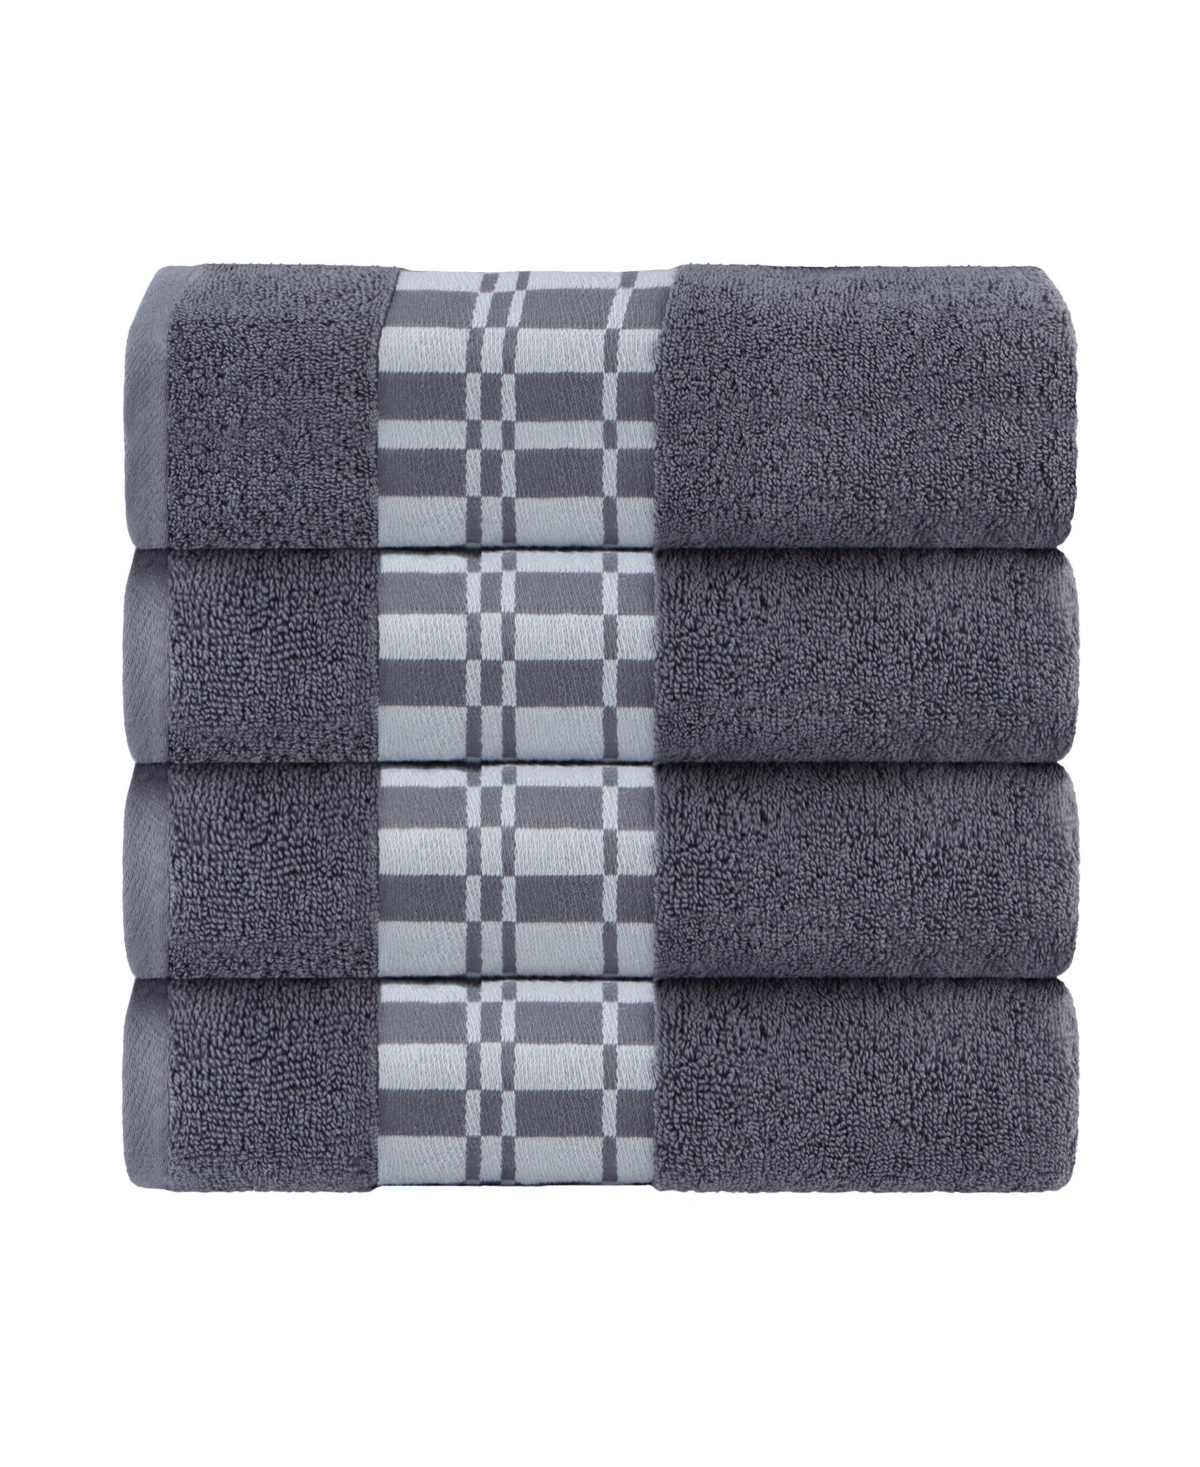 Superior Larissa Geometric Embroidered Jacquard Border Cotton 4-pc. Bath Towel Set In Gray